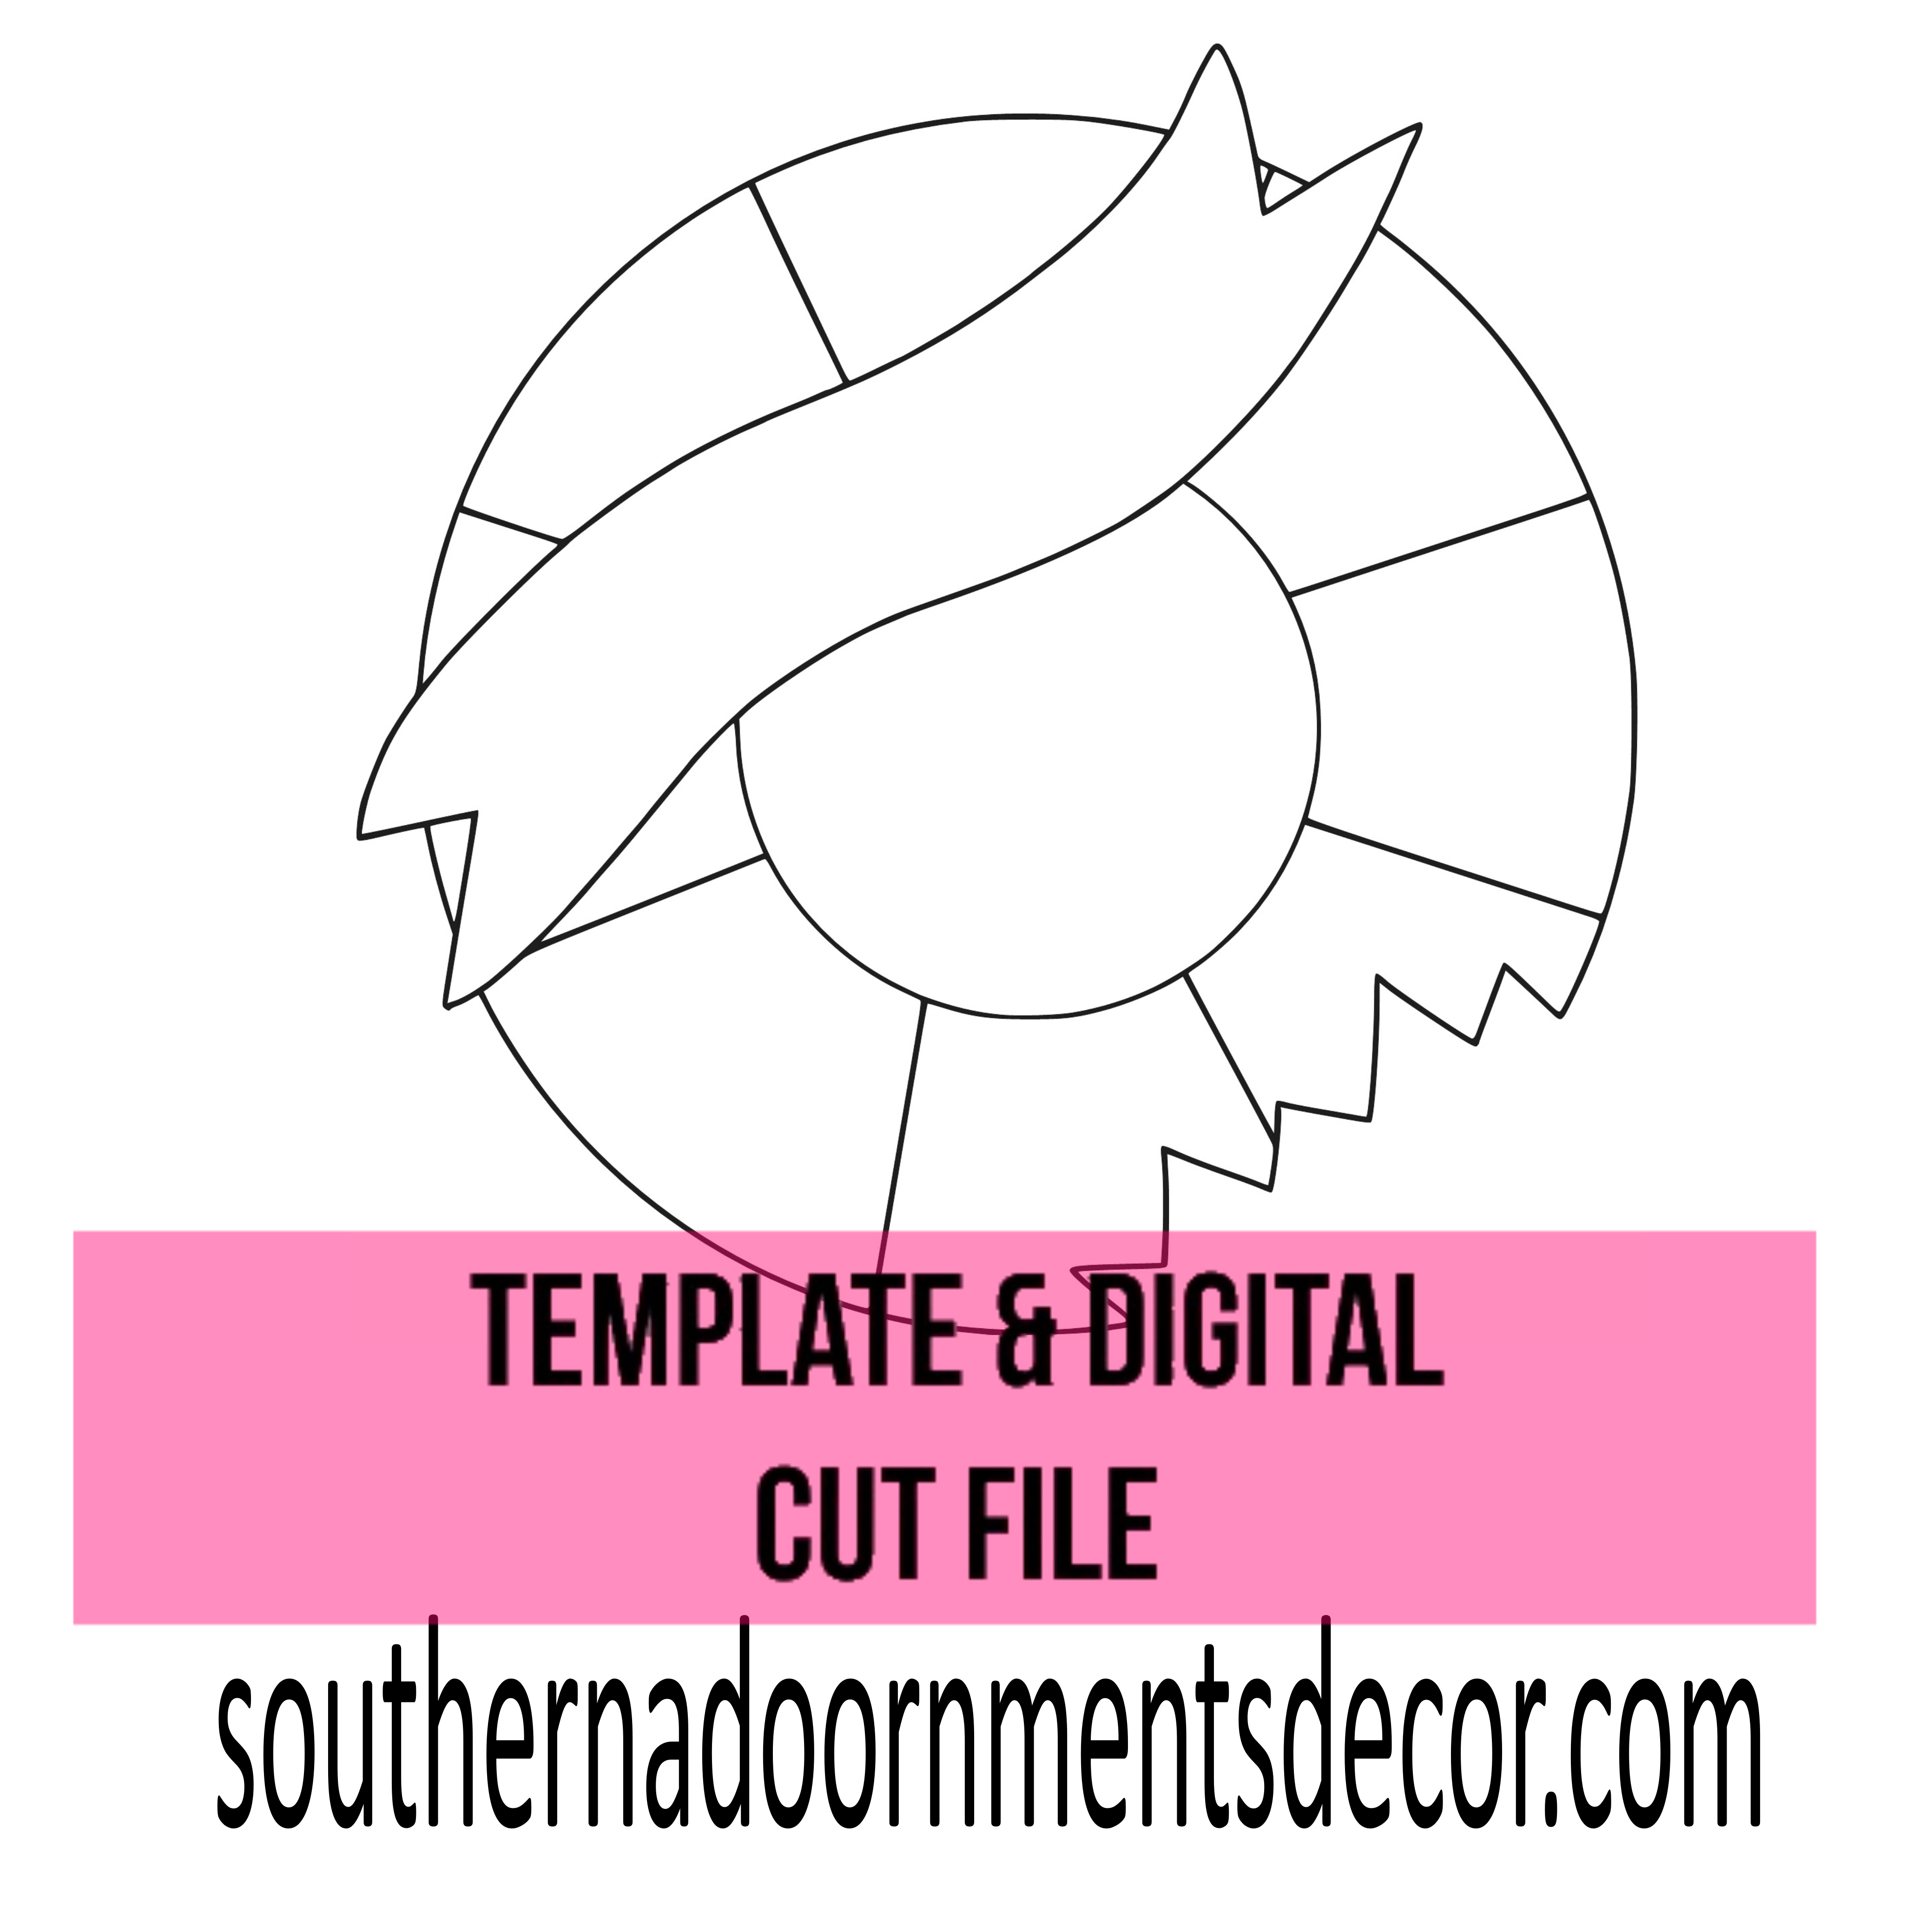 Welcome Aboard Template & Digital Cut File